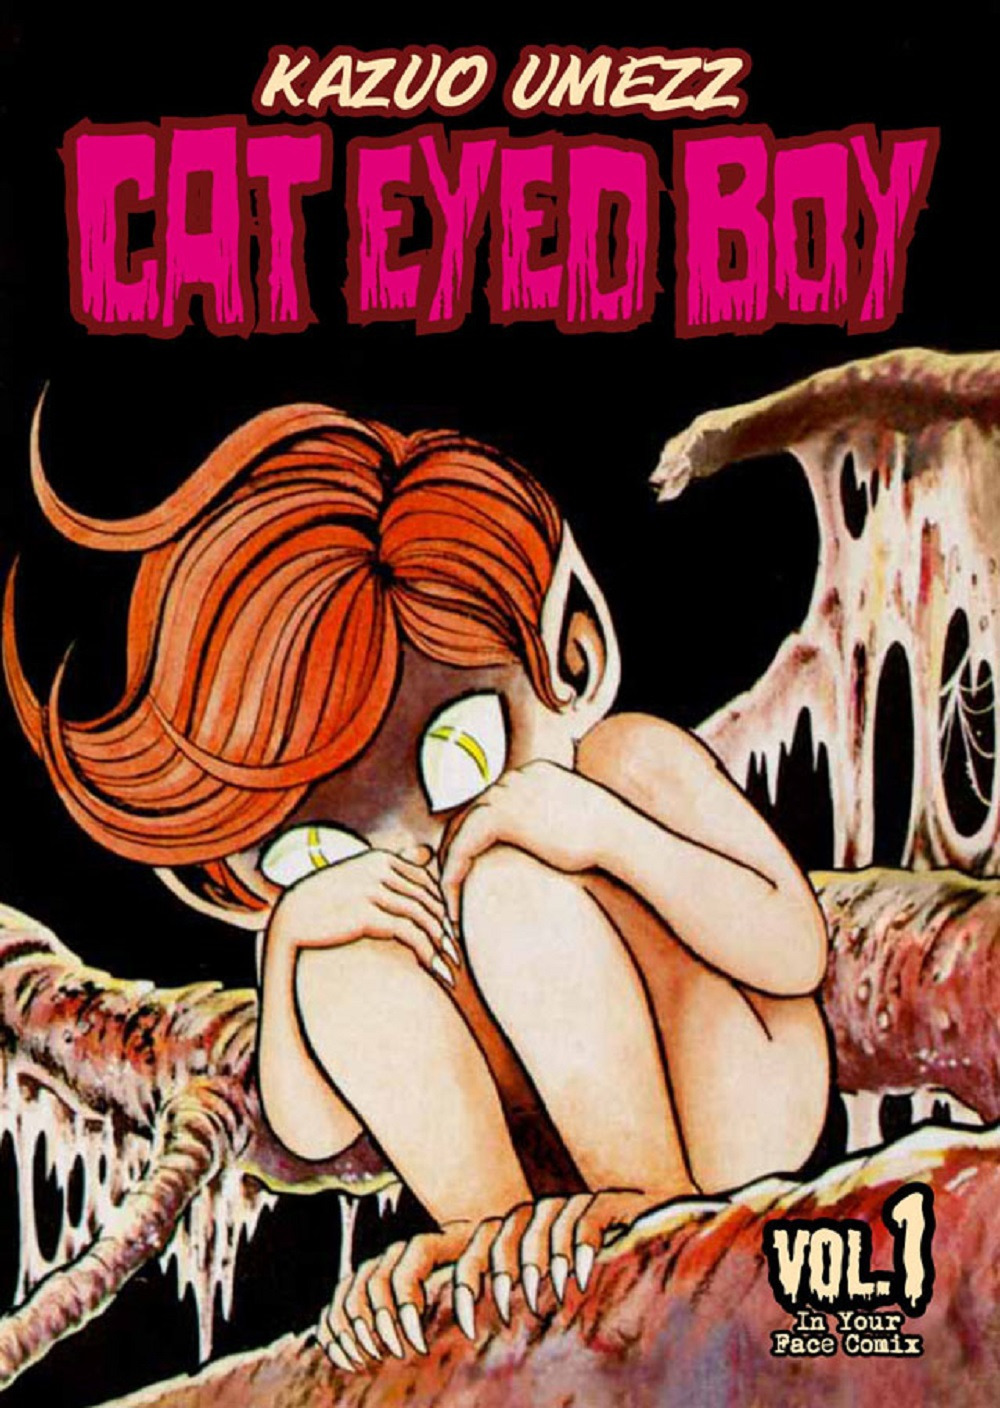 Cat eyed boy. Vol. 1